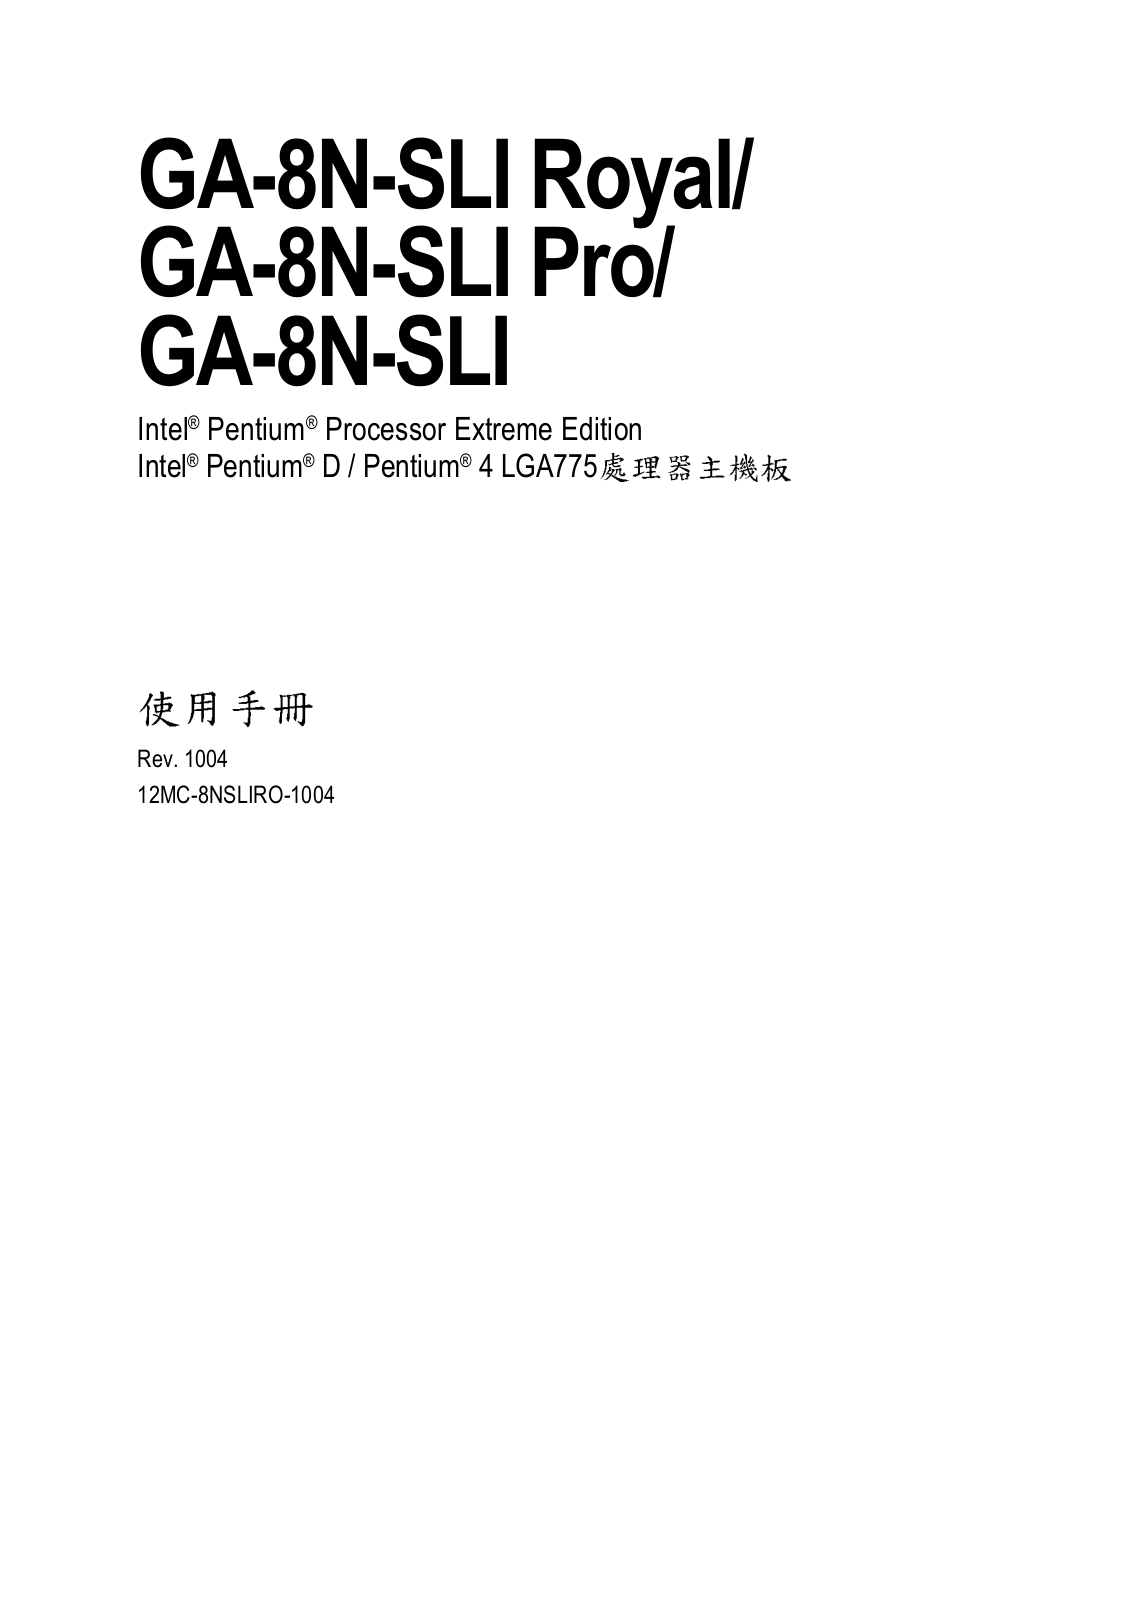 Gigabyte GA-8N-SLI ROYAL, GA-8N-SLI PRO, GA-8N-SLI User Manual